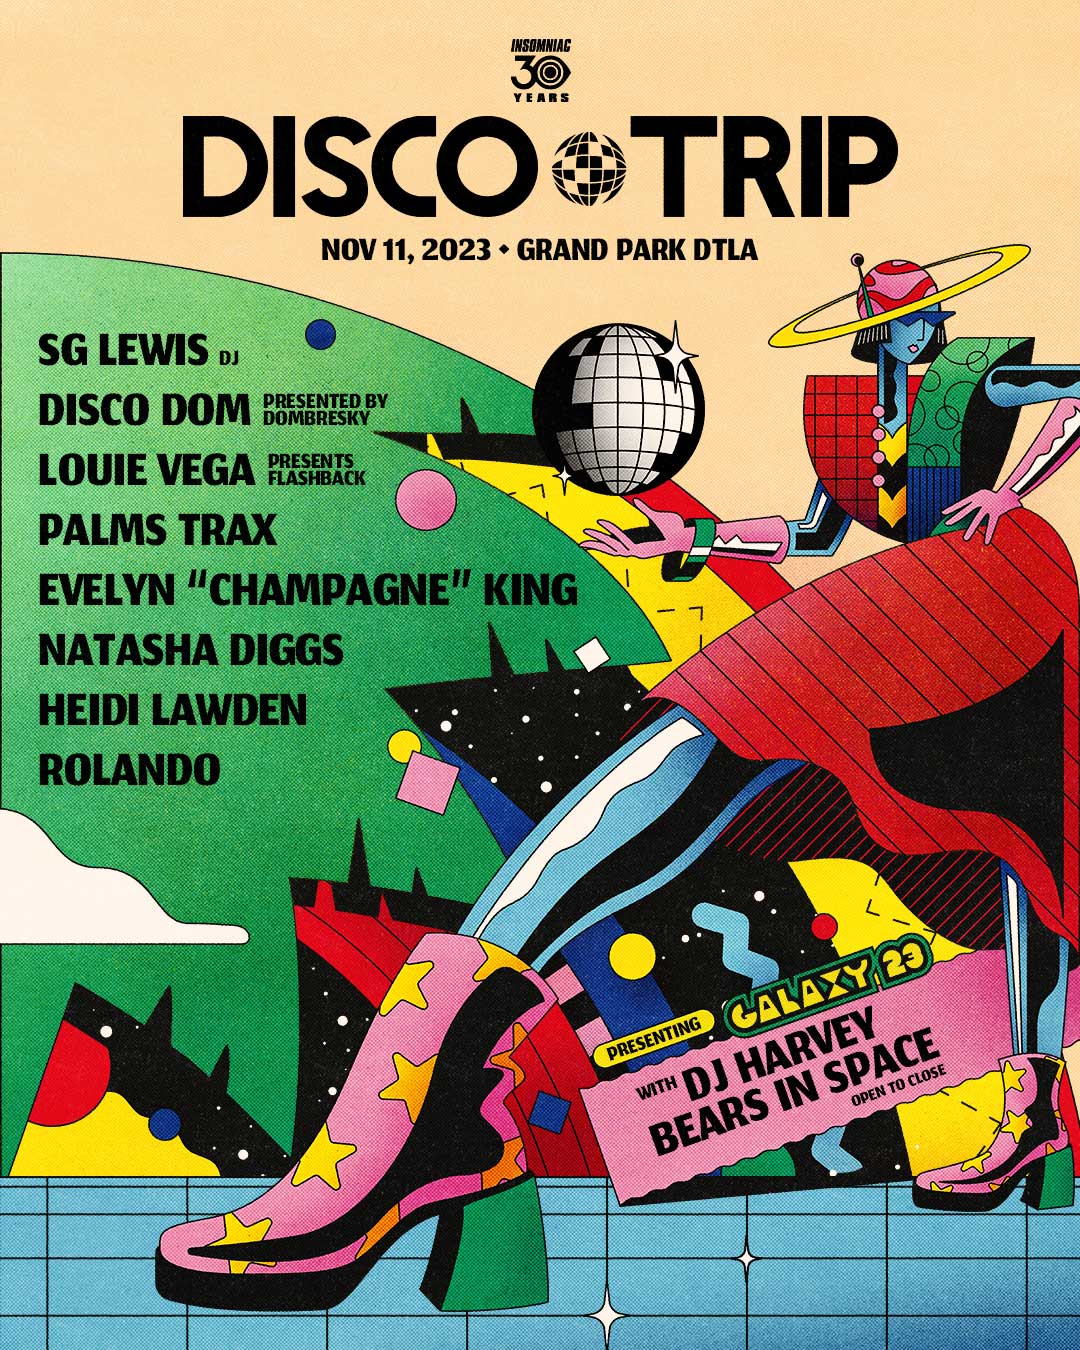 Disco Trip 2023 Lineup